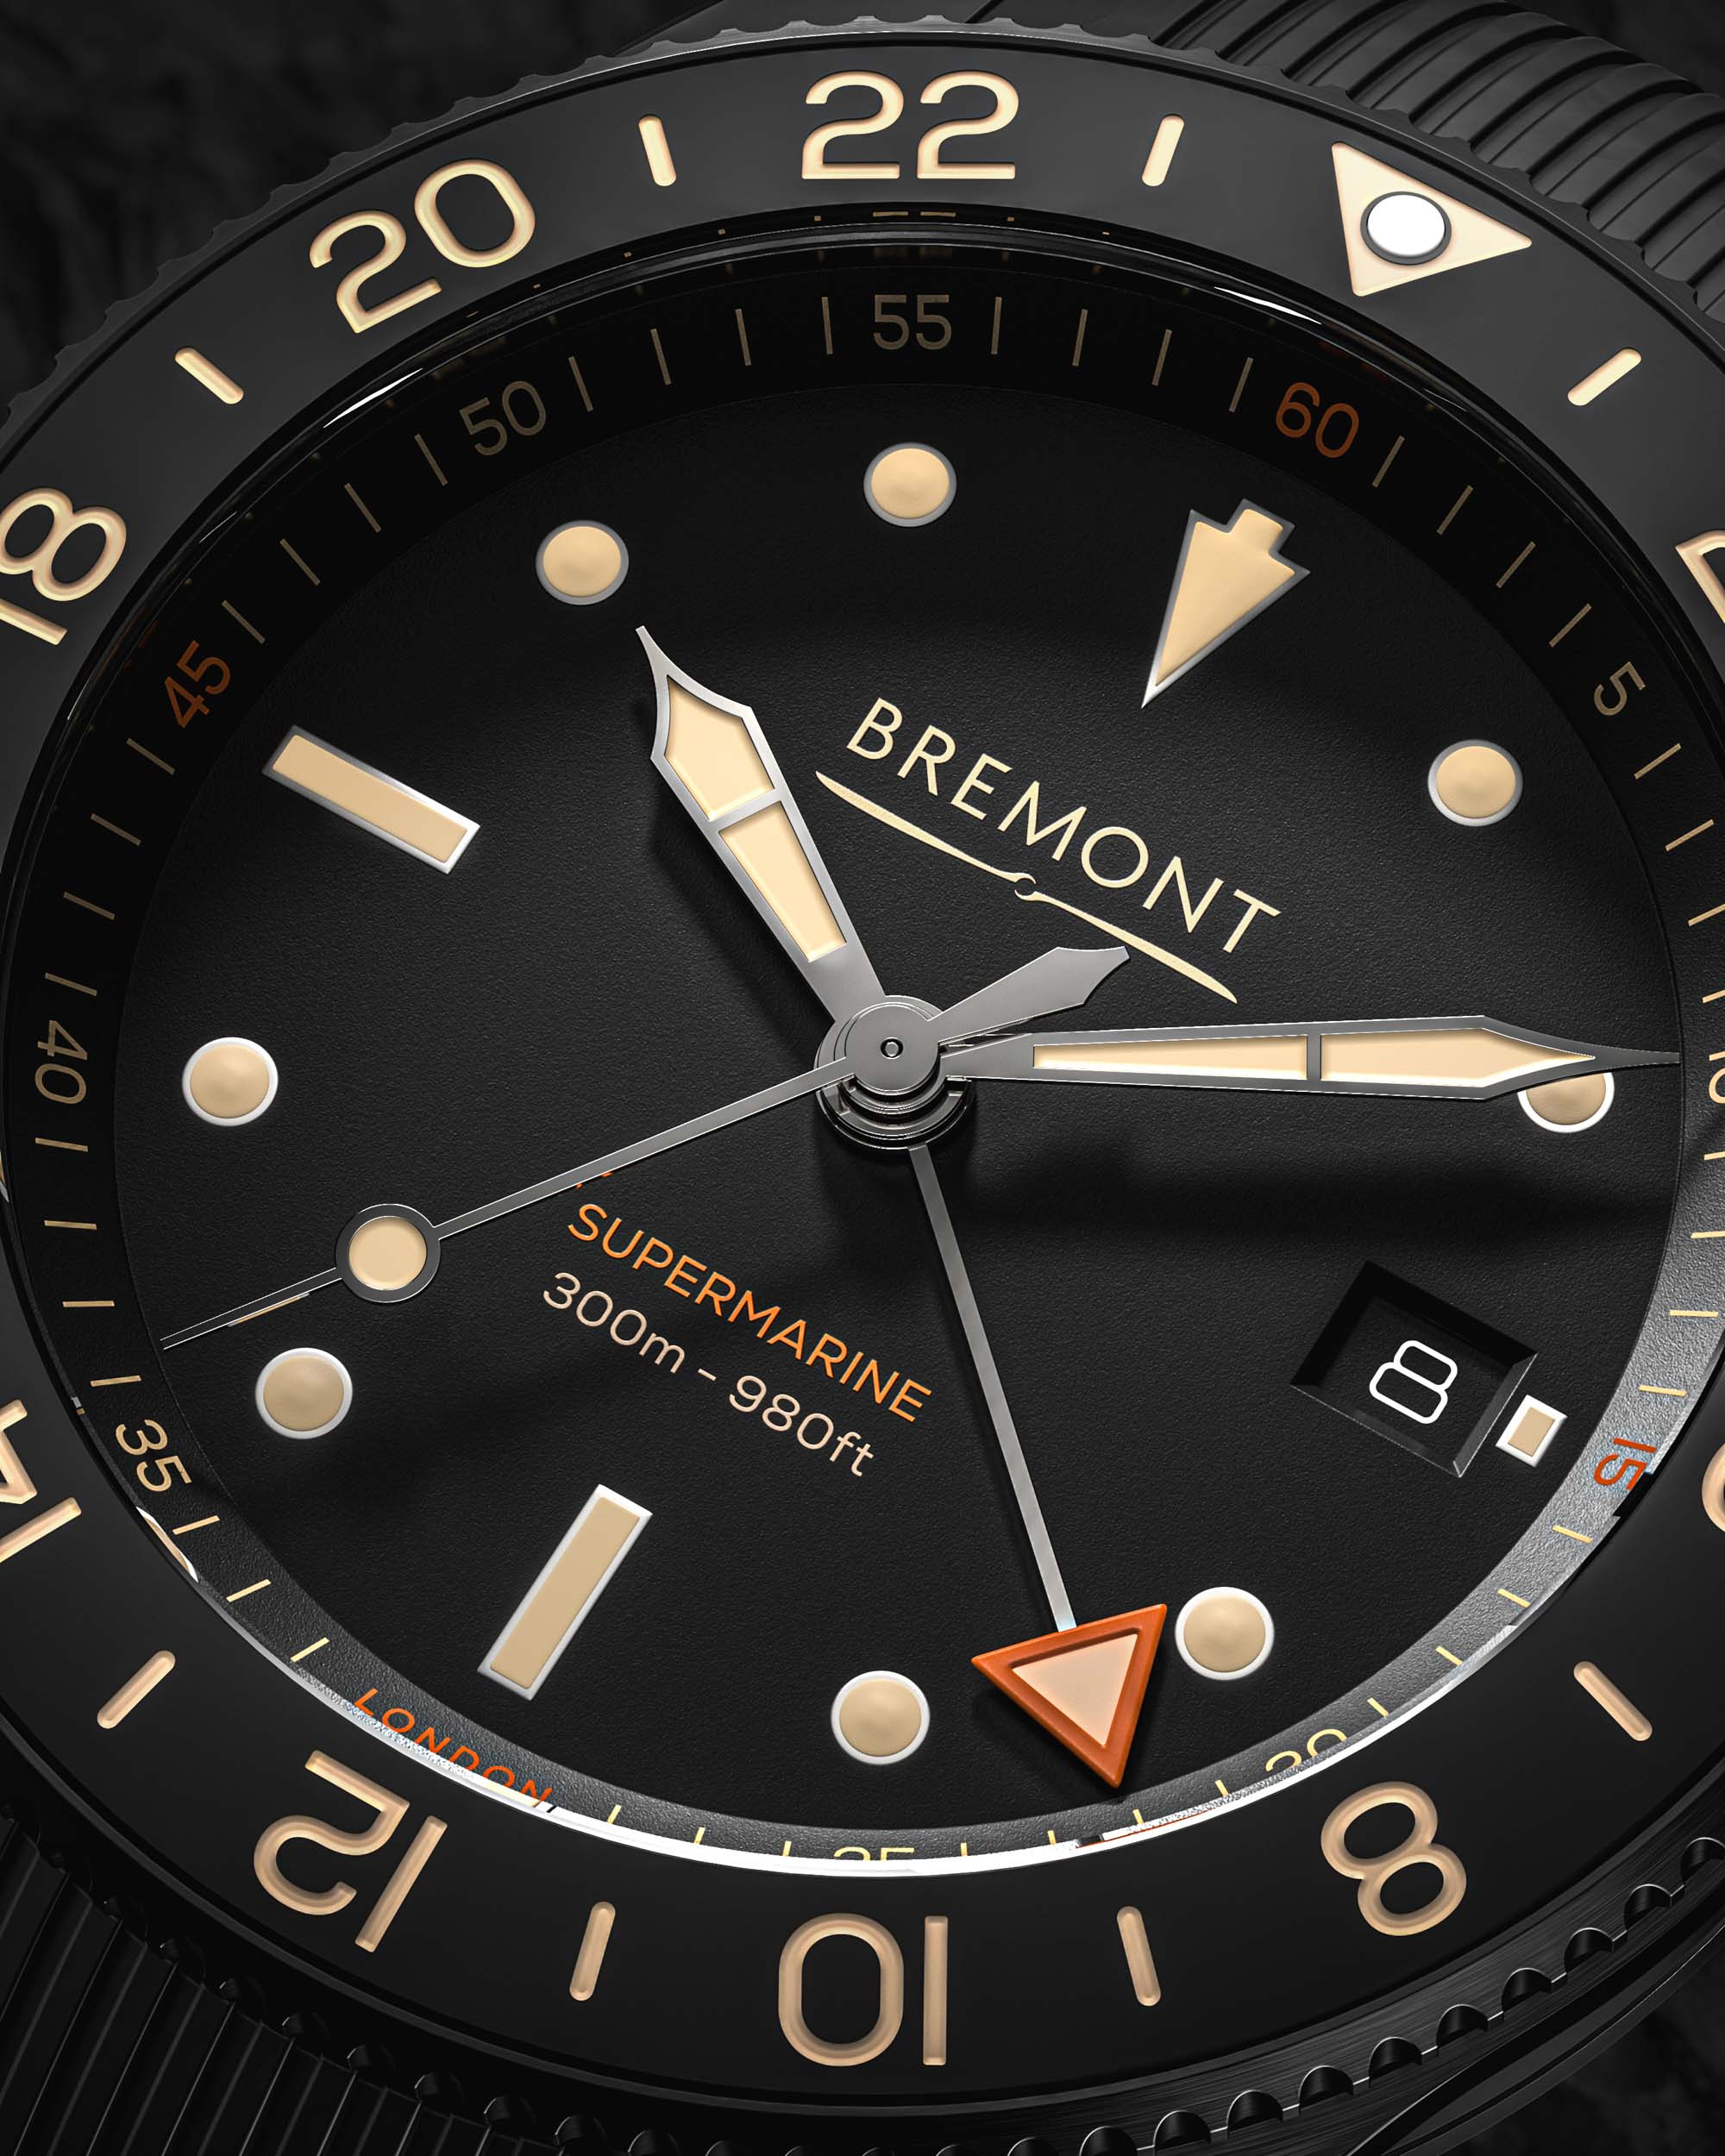 Новый релиз: Часы Bremont Supermarine S302 GMT